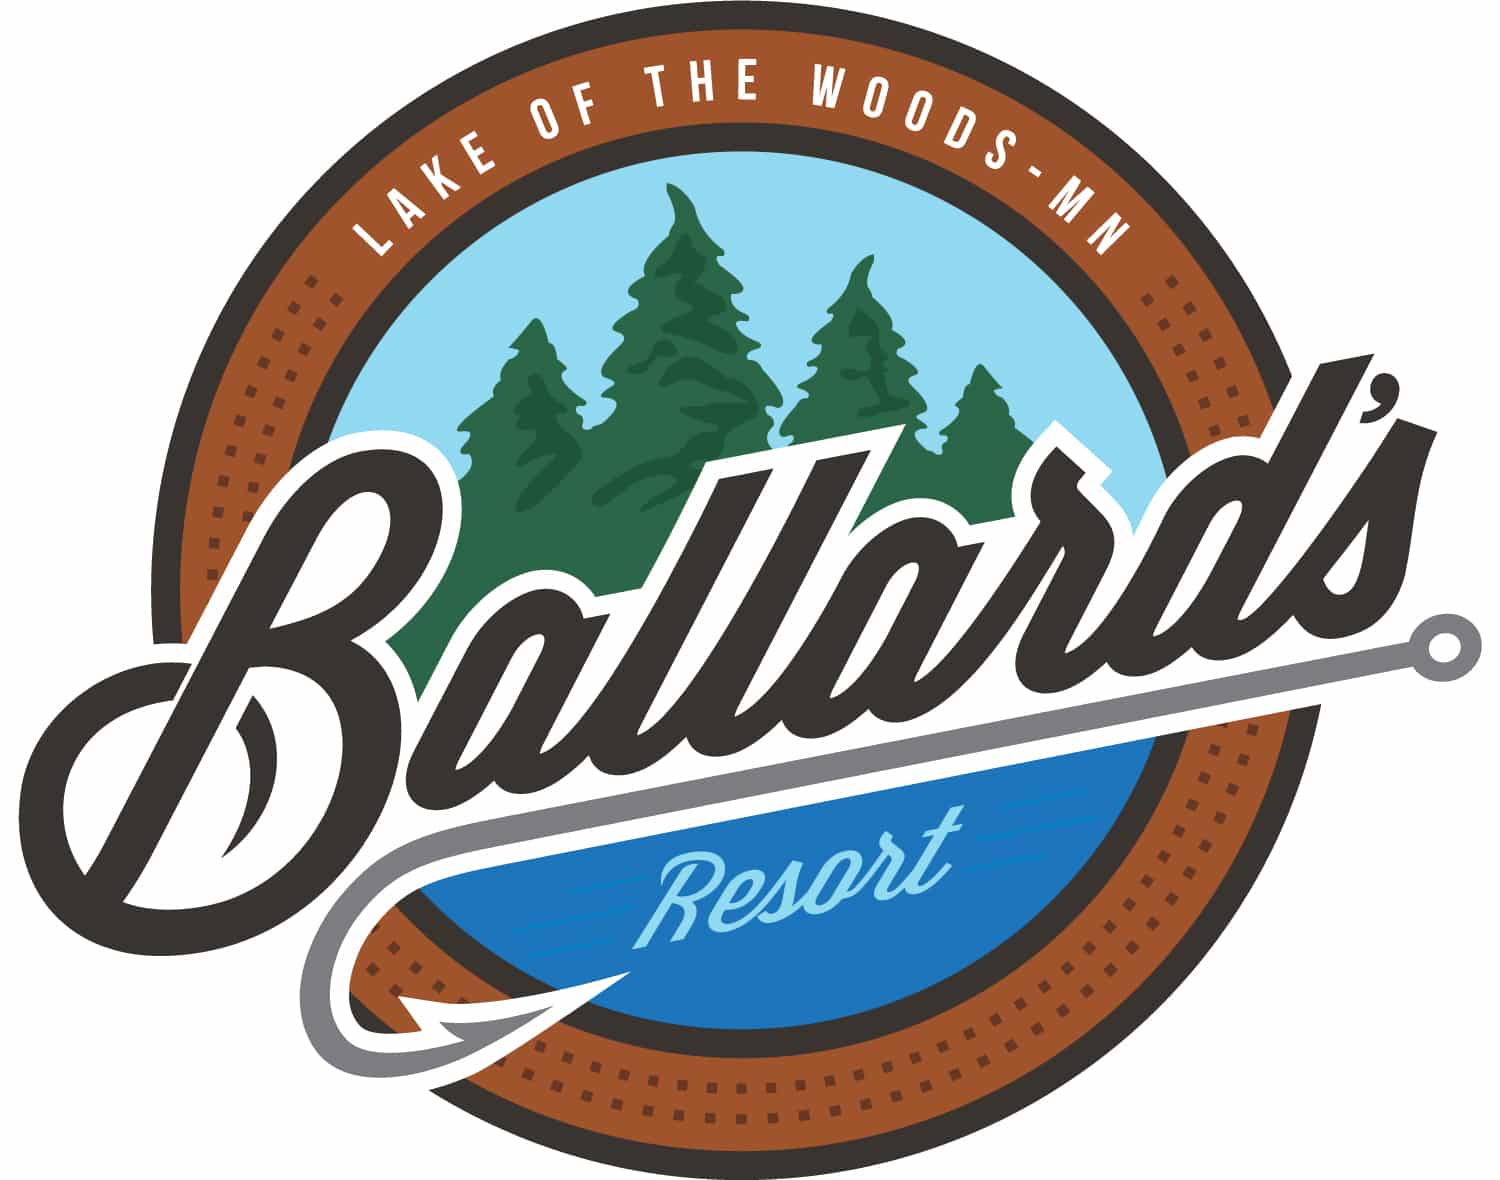 Ballard's Resort - 2013 New Logo